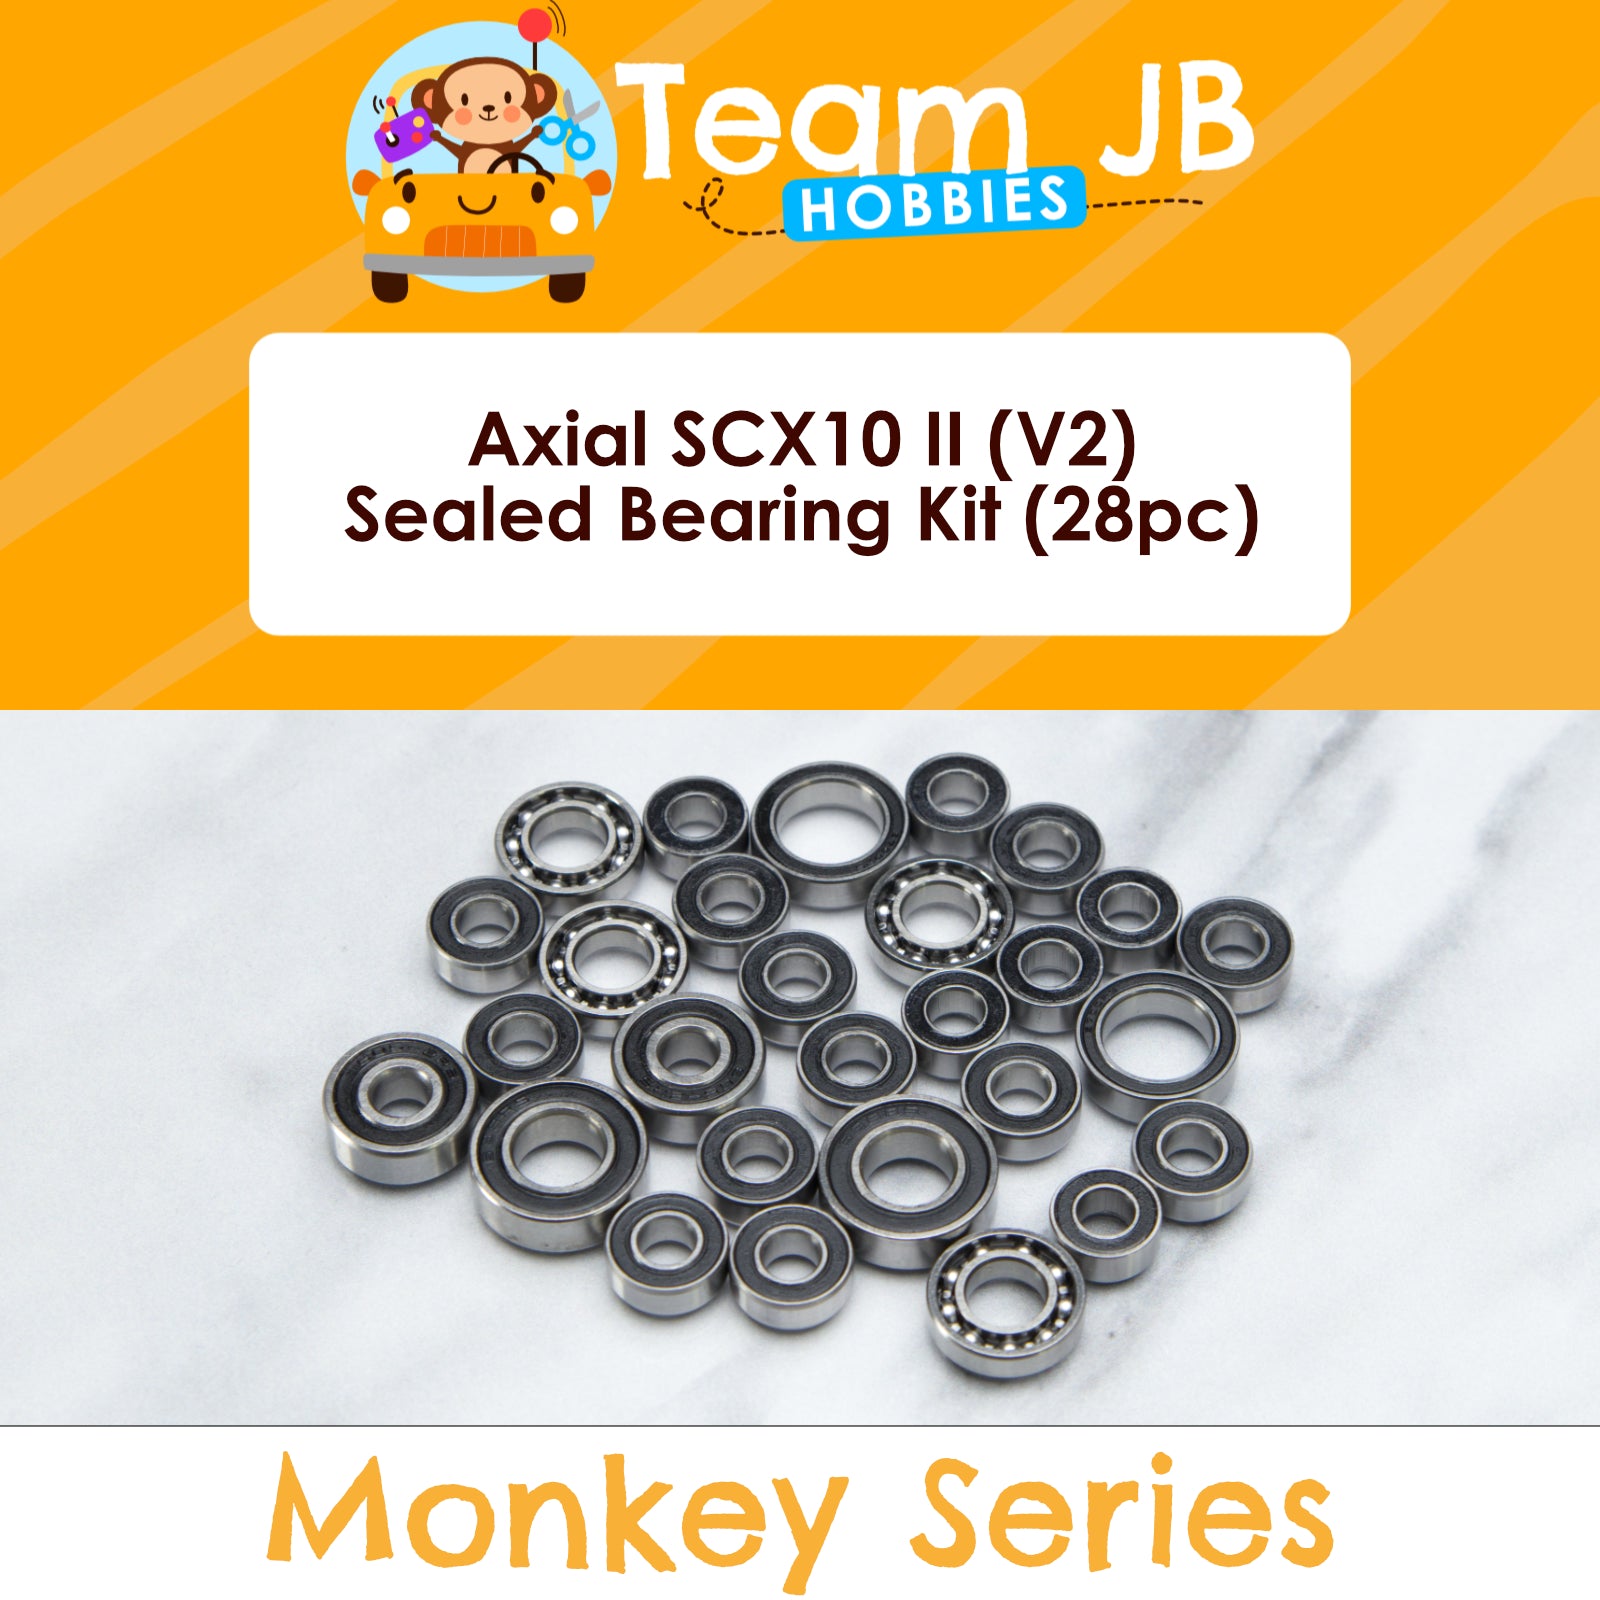 Axial SCX10 II (V2) - Sealed Bearing Kit